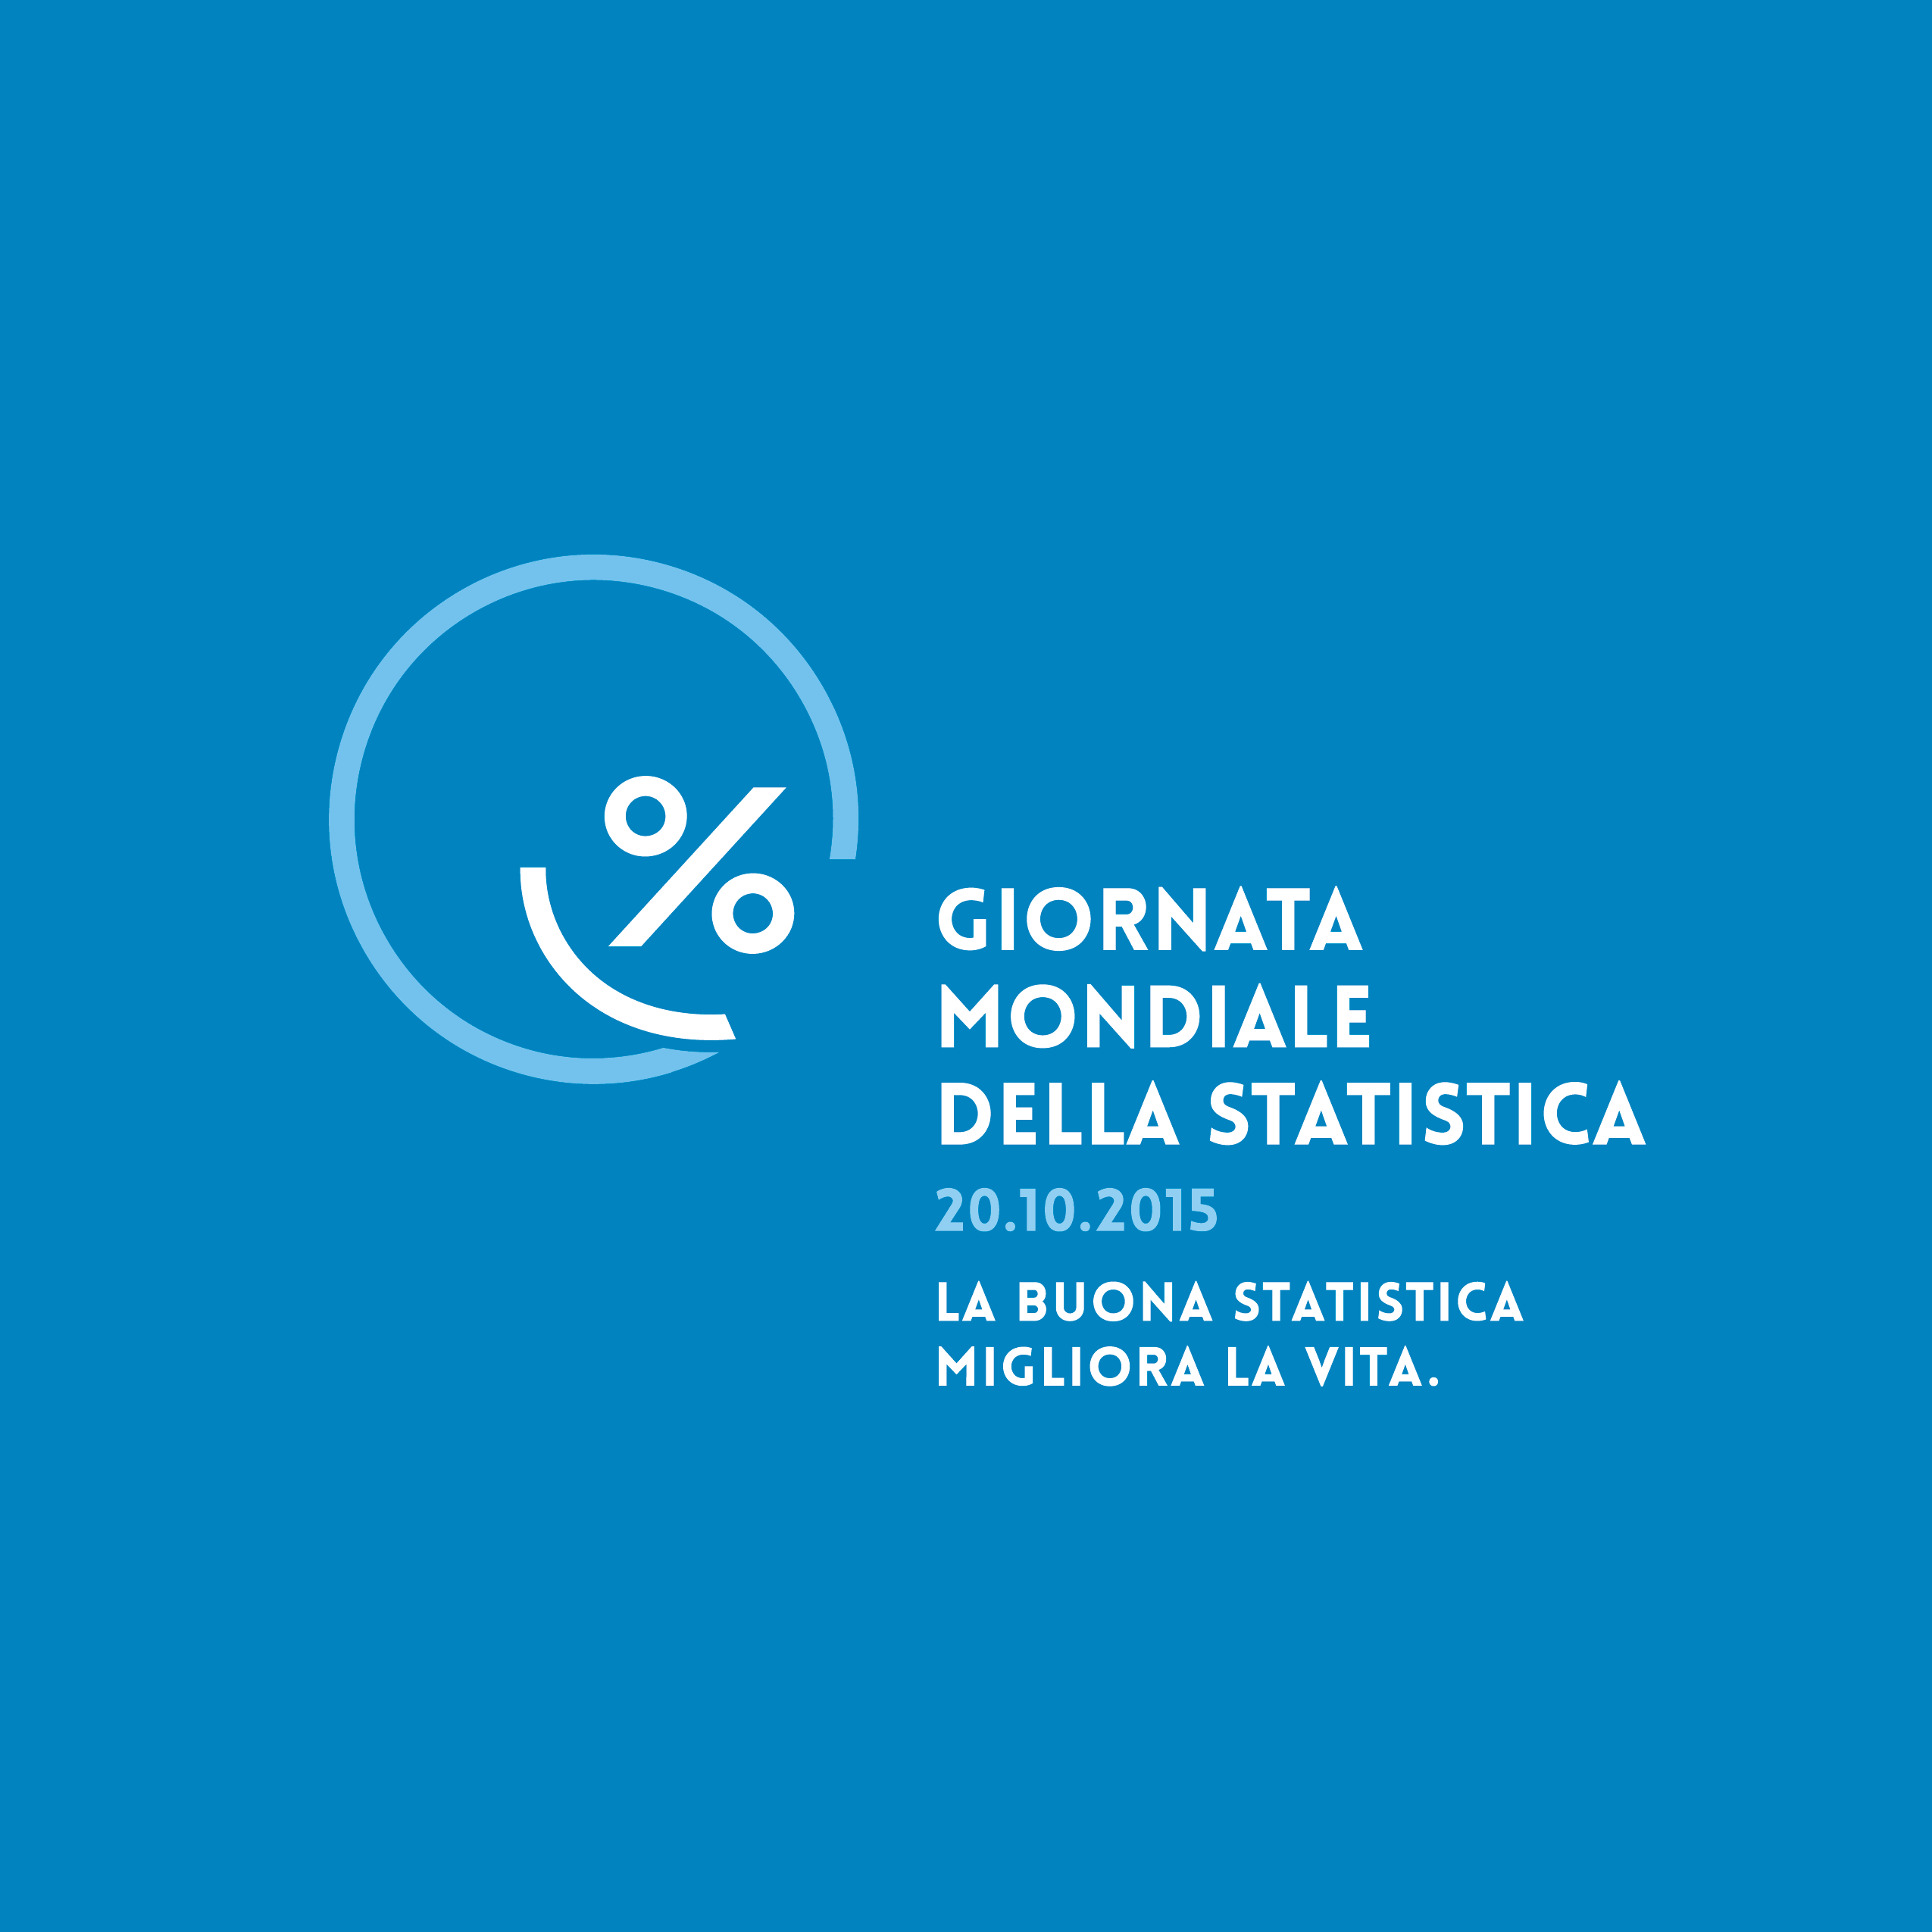 World Statistics Day Logo in Italian